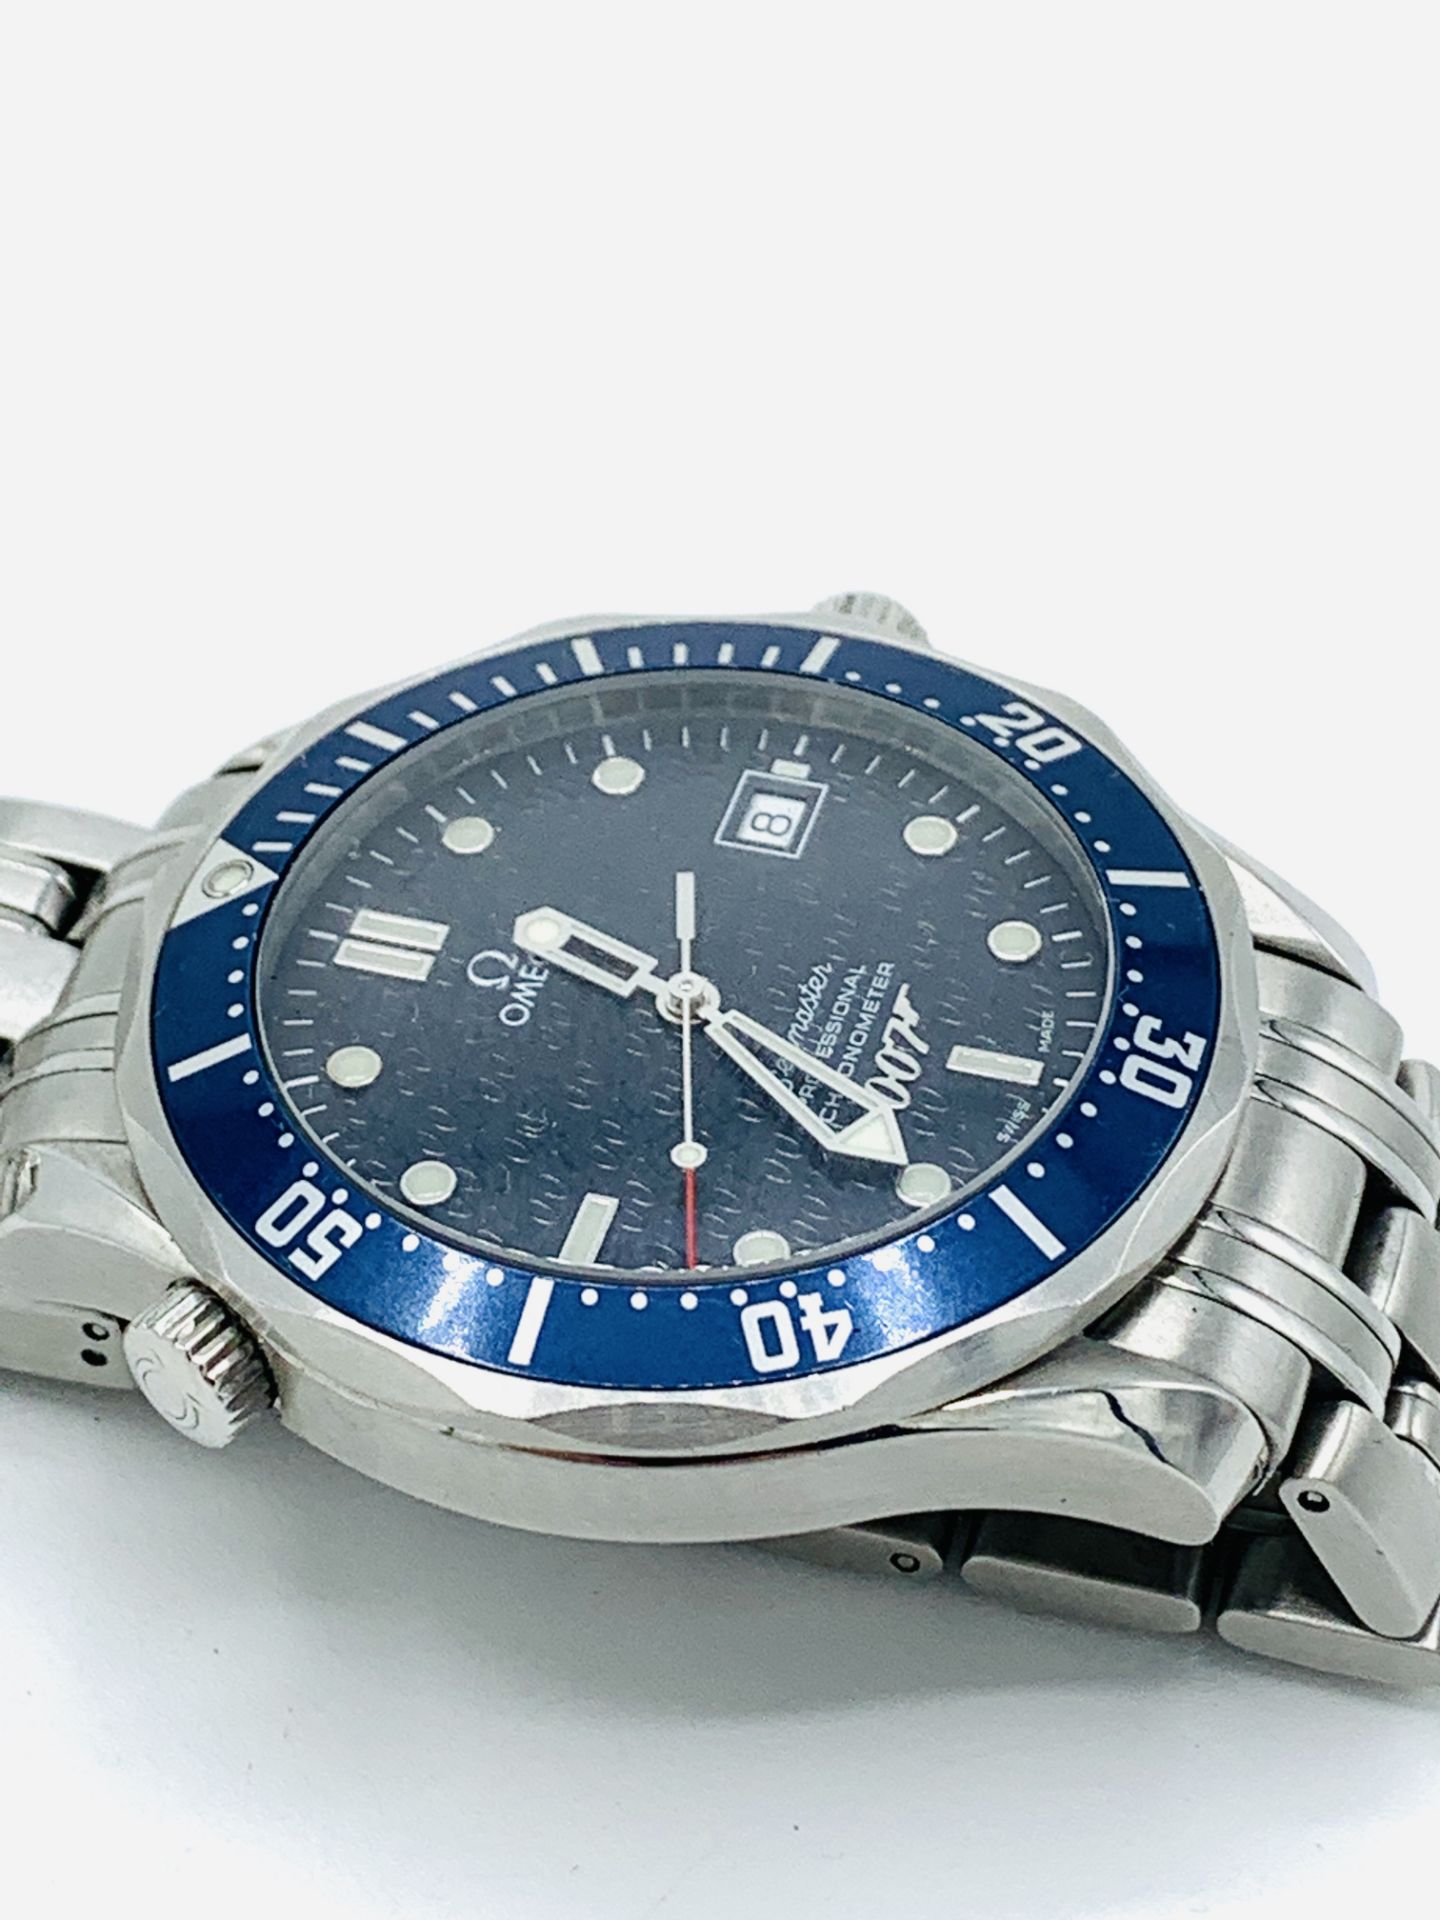 Omega Seamaster Professional Chronometer "40 years of James Bond" Limited Series - Image 8 of 10